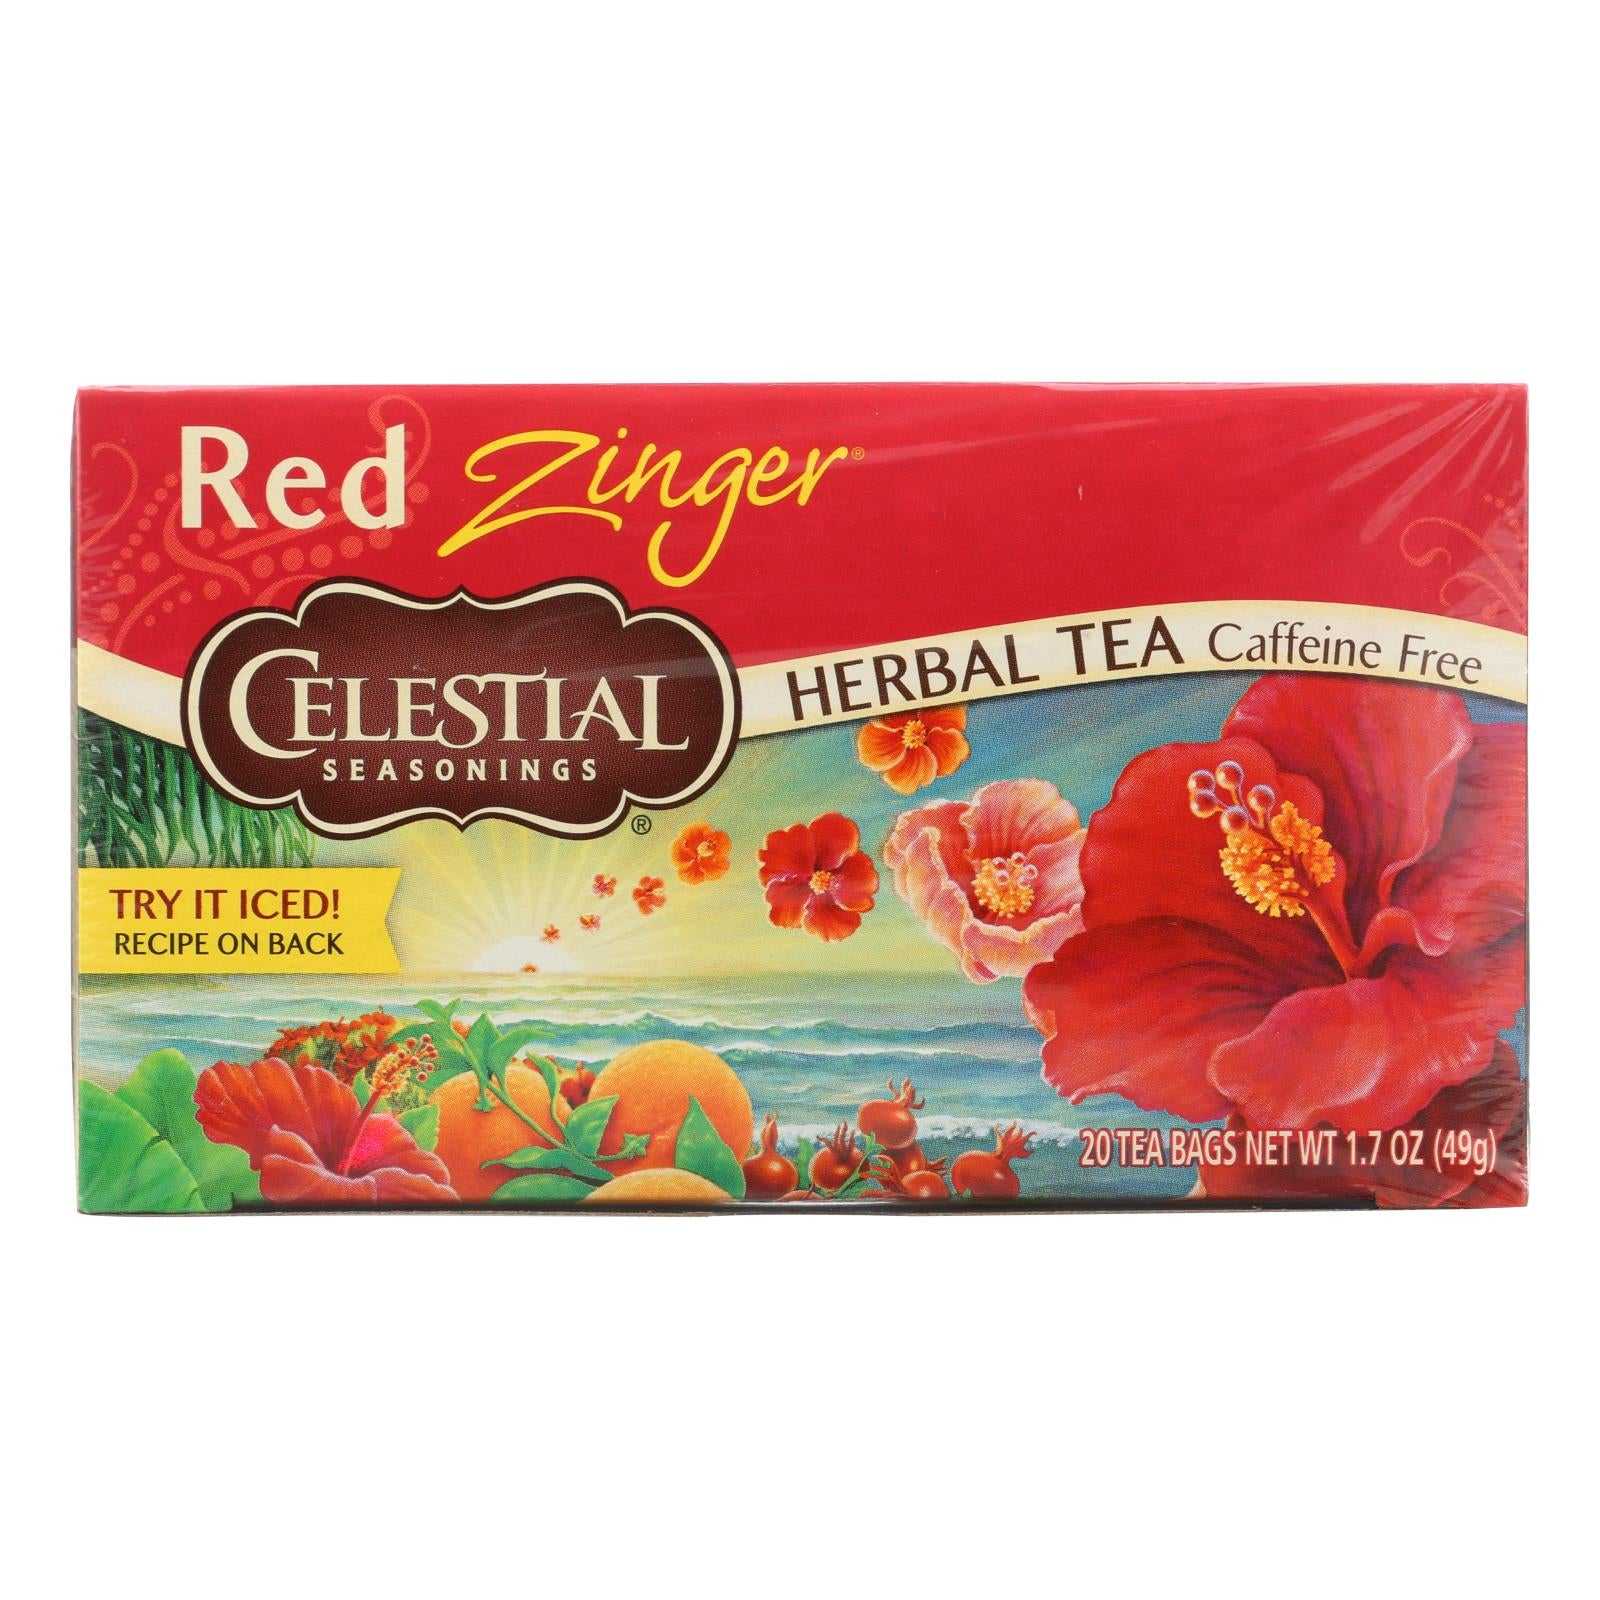 Celestial Seasonings, Celestial Seasonings Herbal Tea Caffeine Free Red Zinger - 20 Tea Bags - Case of 6